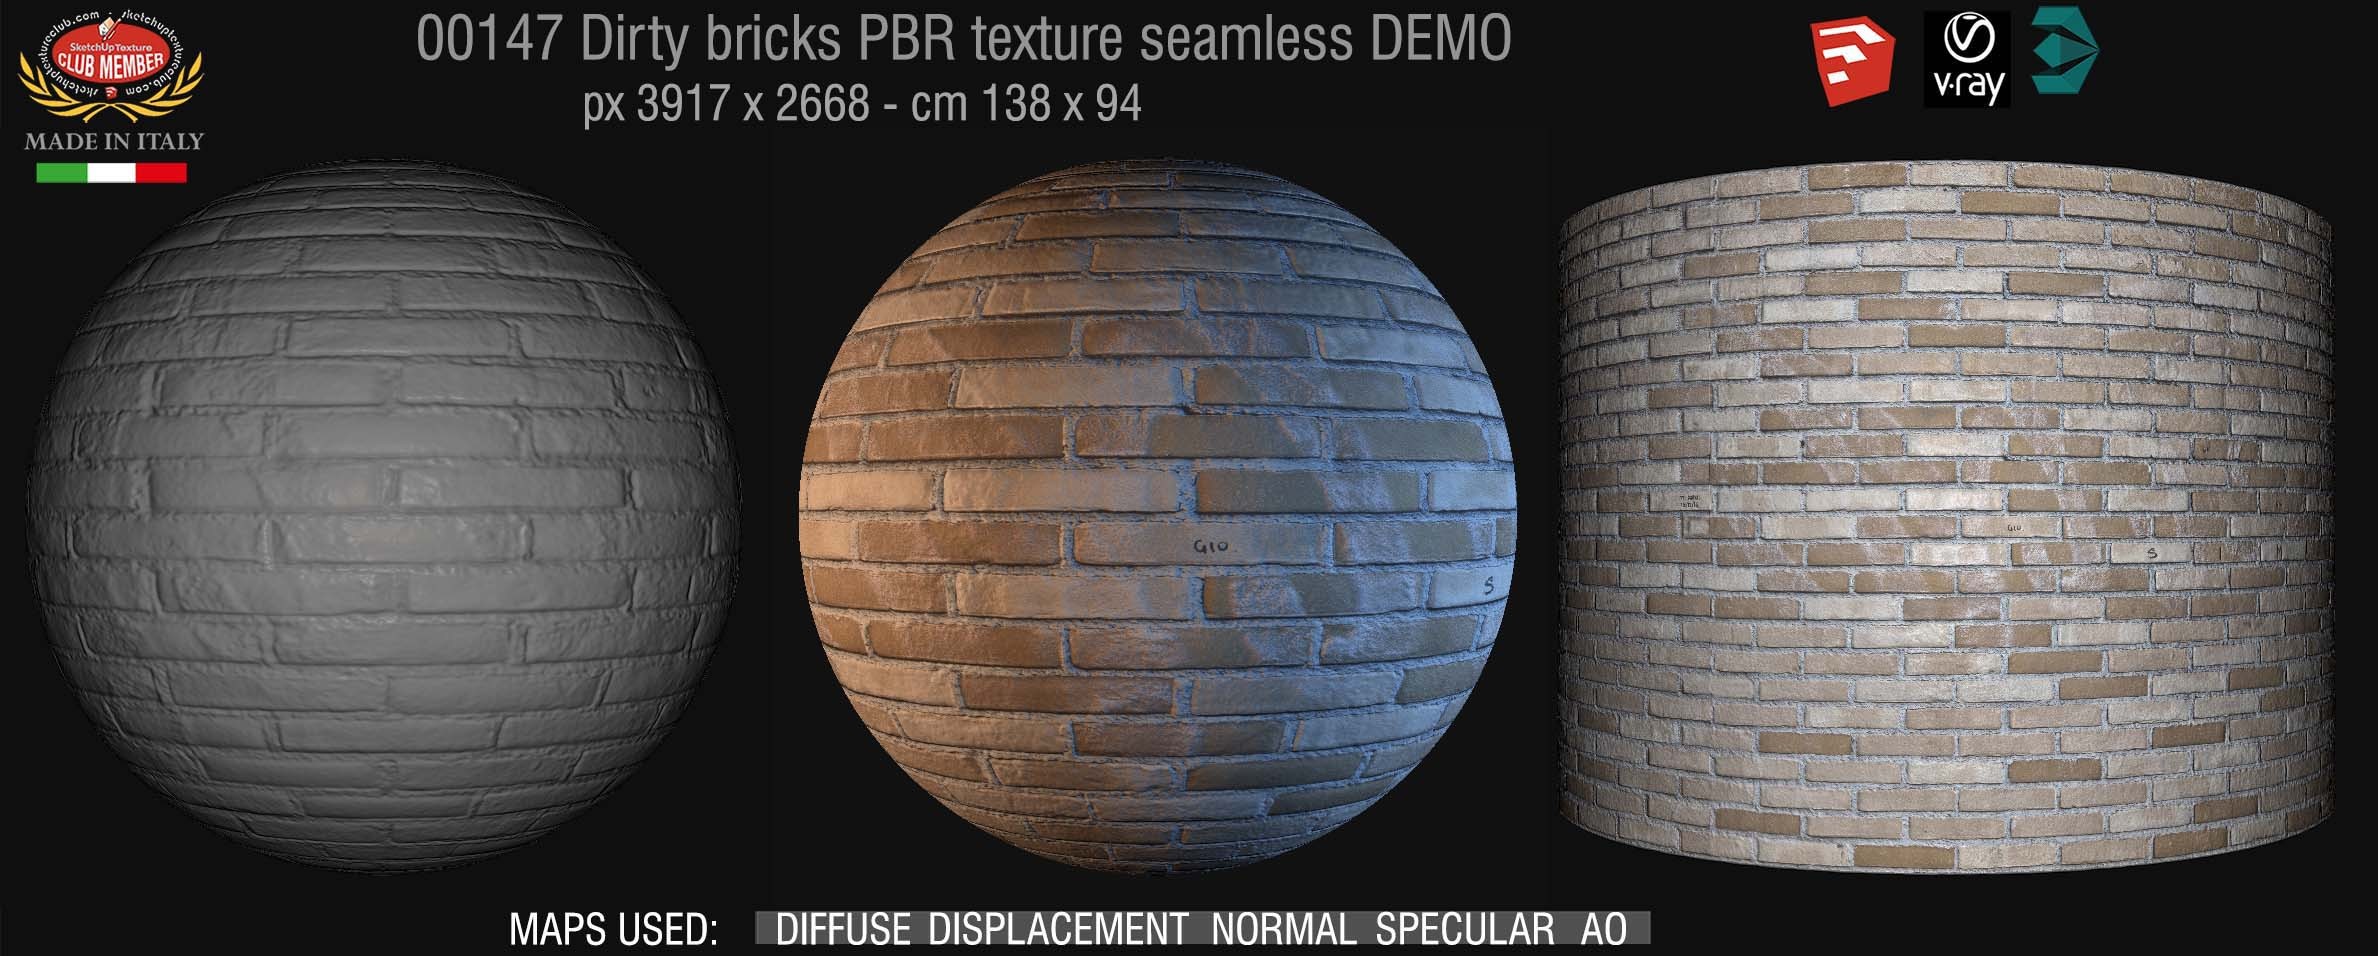 00147 Dirty bricks PBR texture seamless DEMO